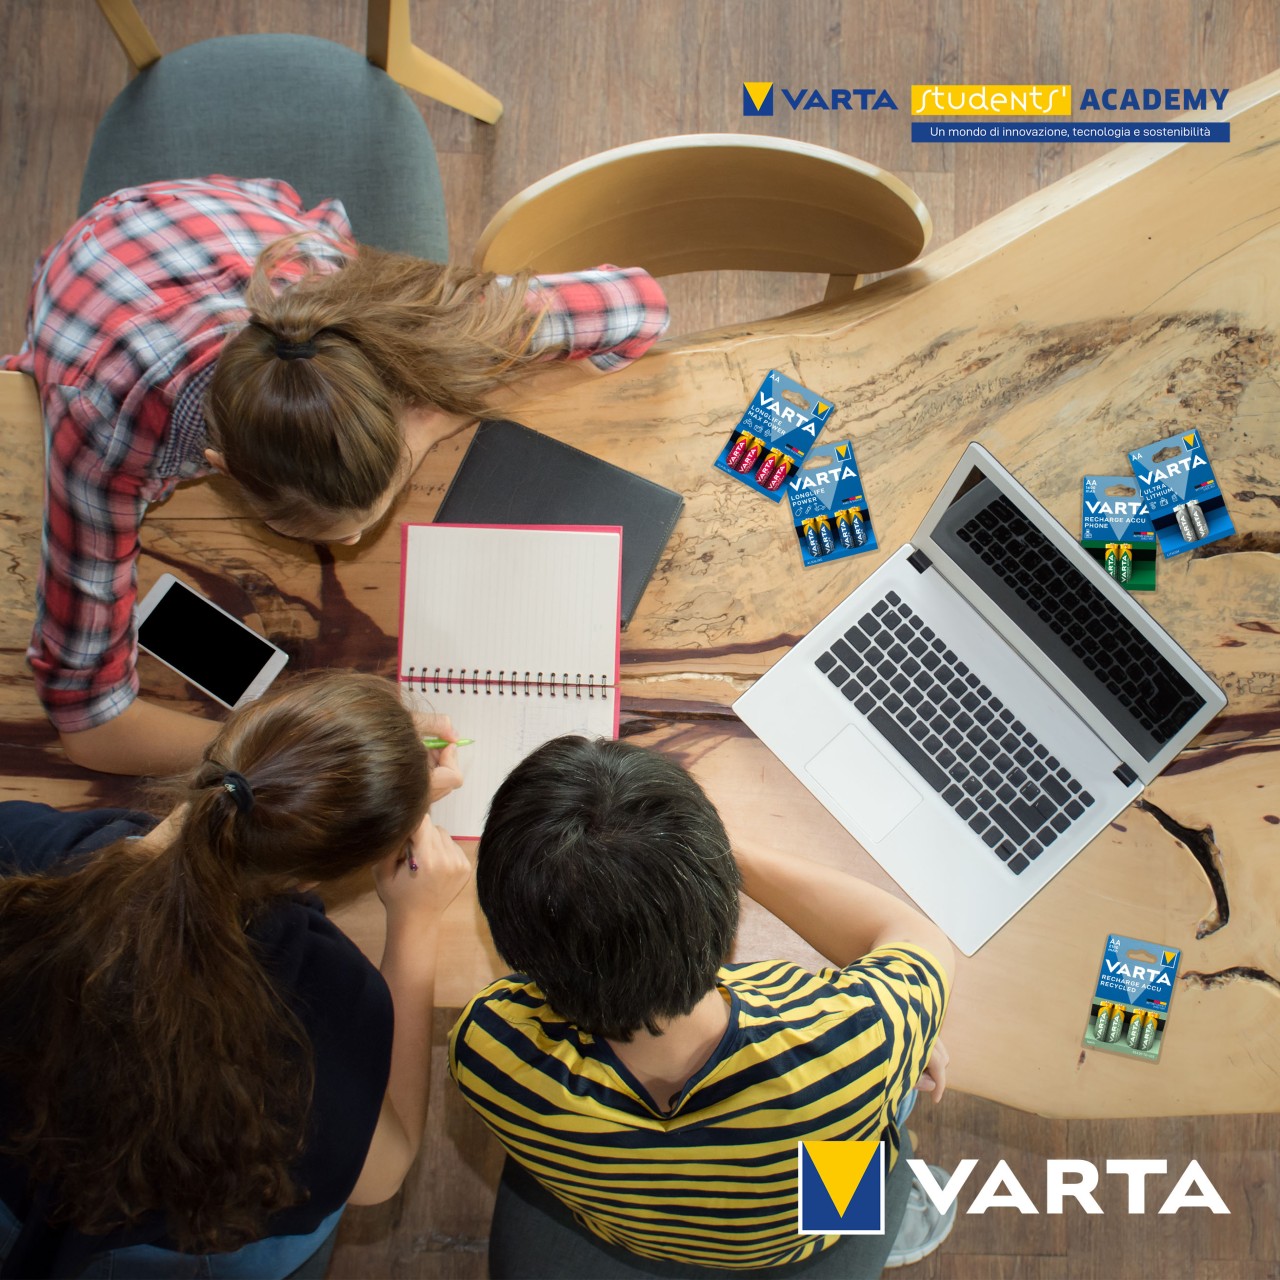 VARTA student's academy